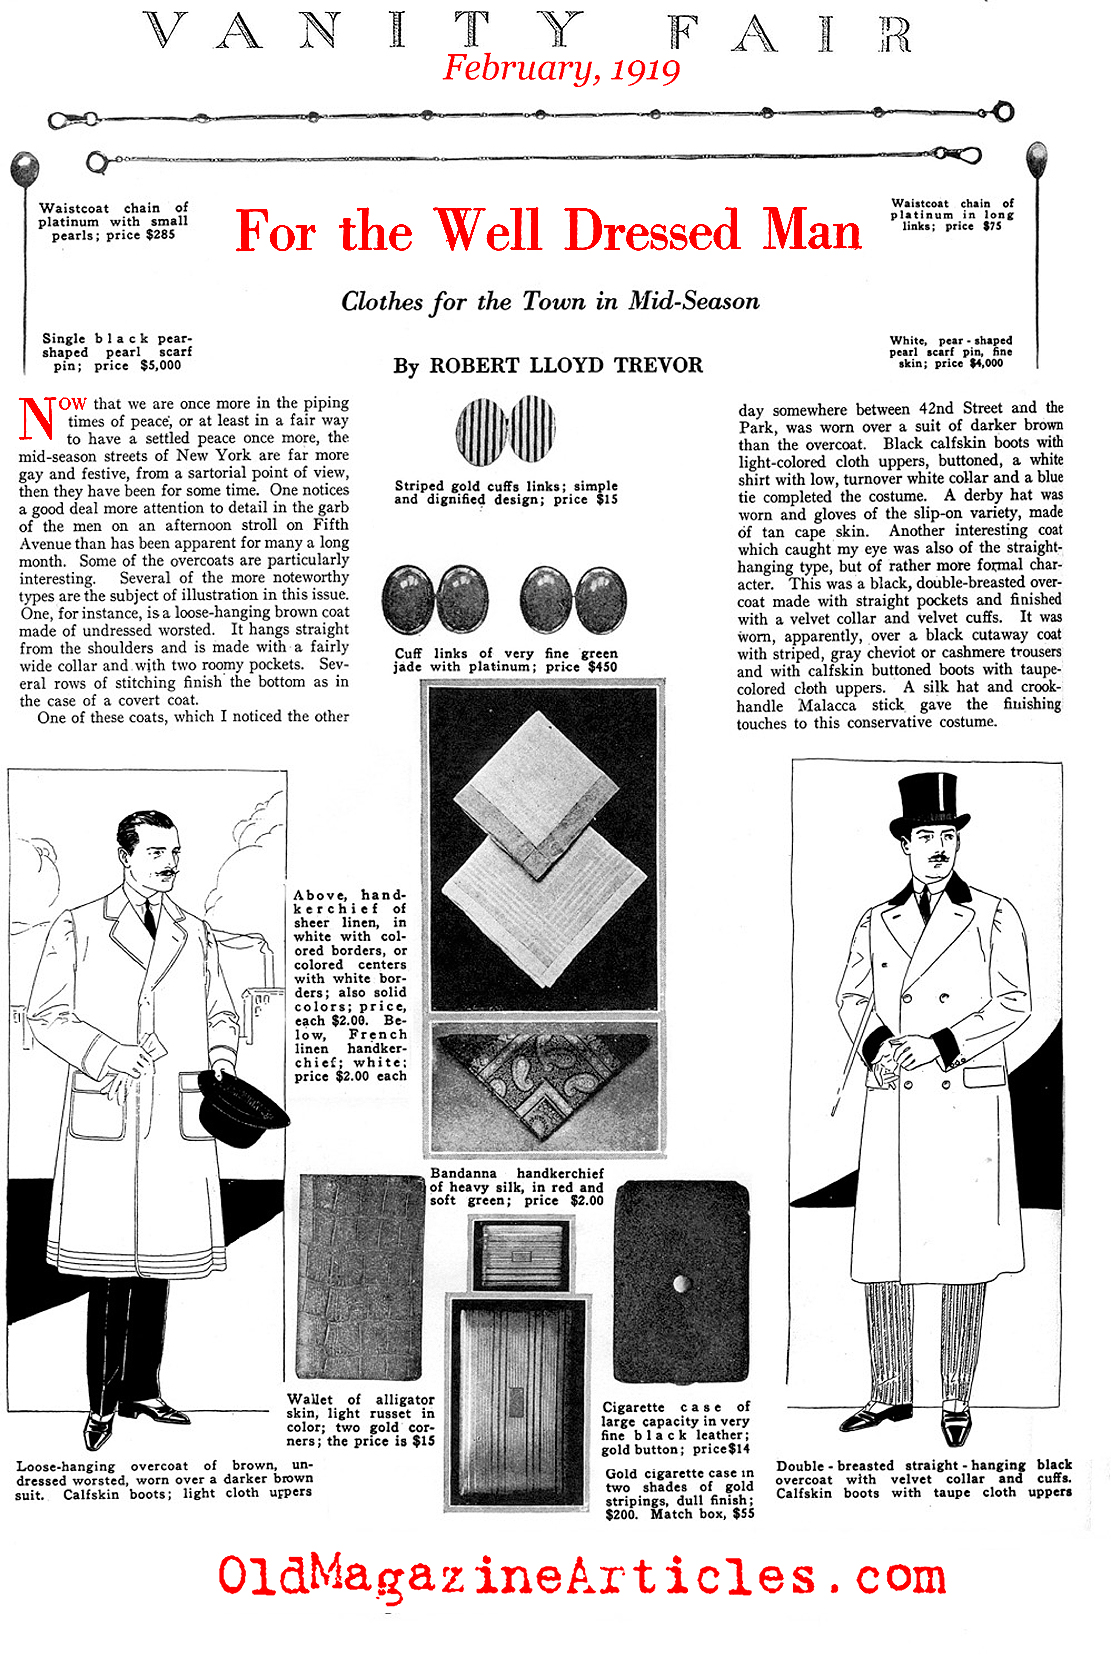 The Well Dressed Man in February (Vanity Fair Magazine, 1919)